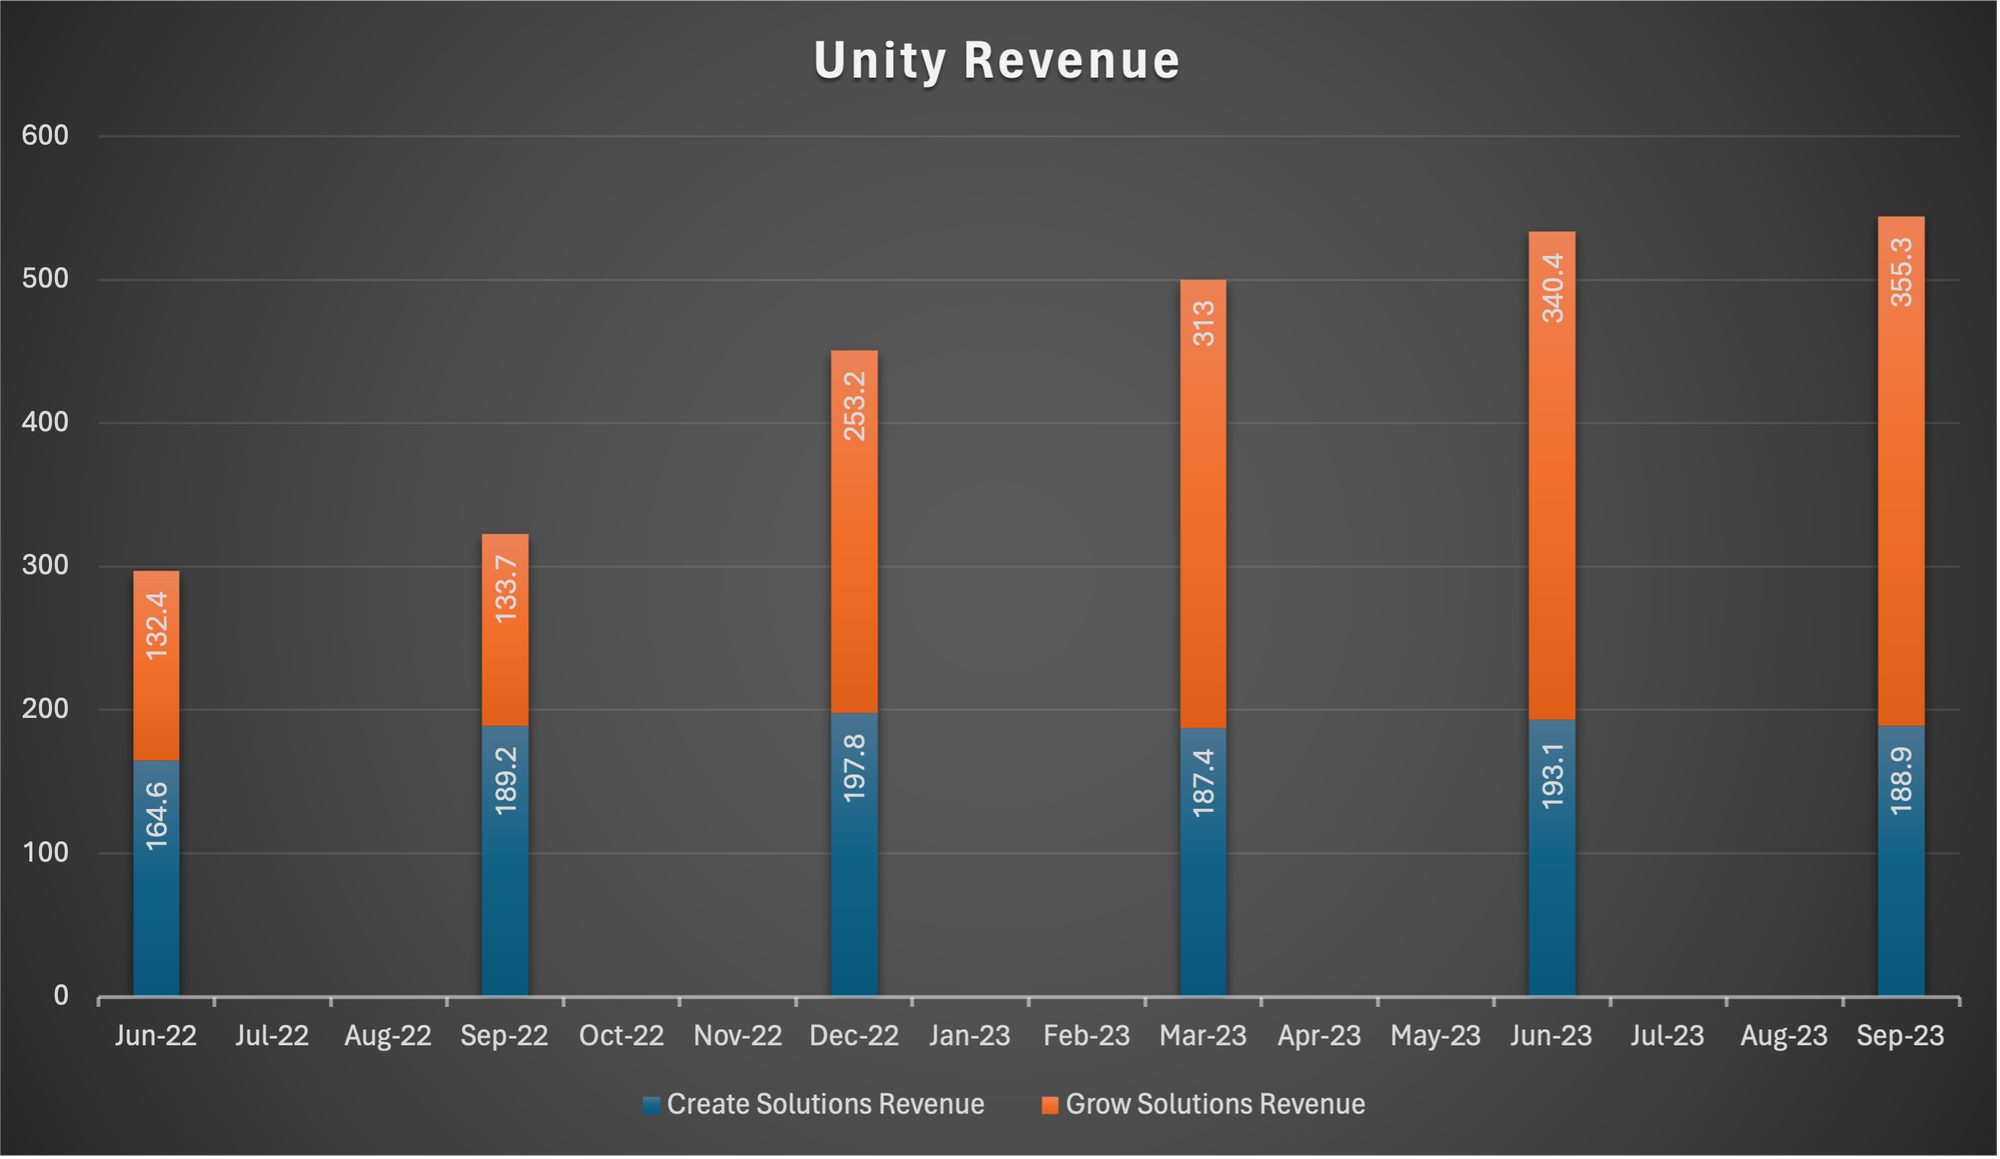 Unity Revenue Breakdown